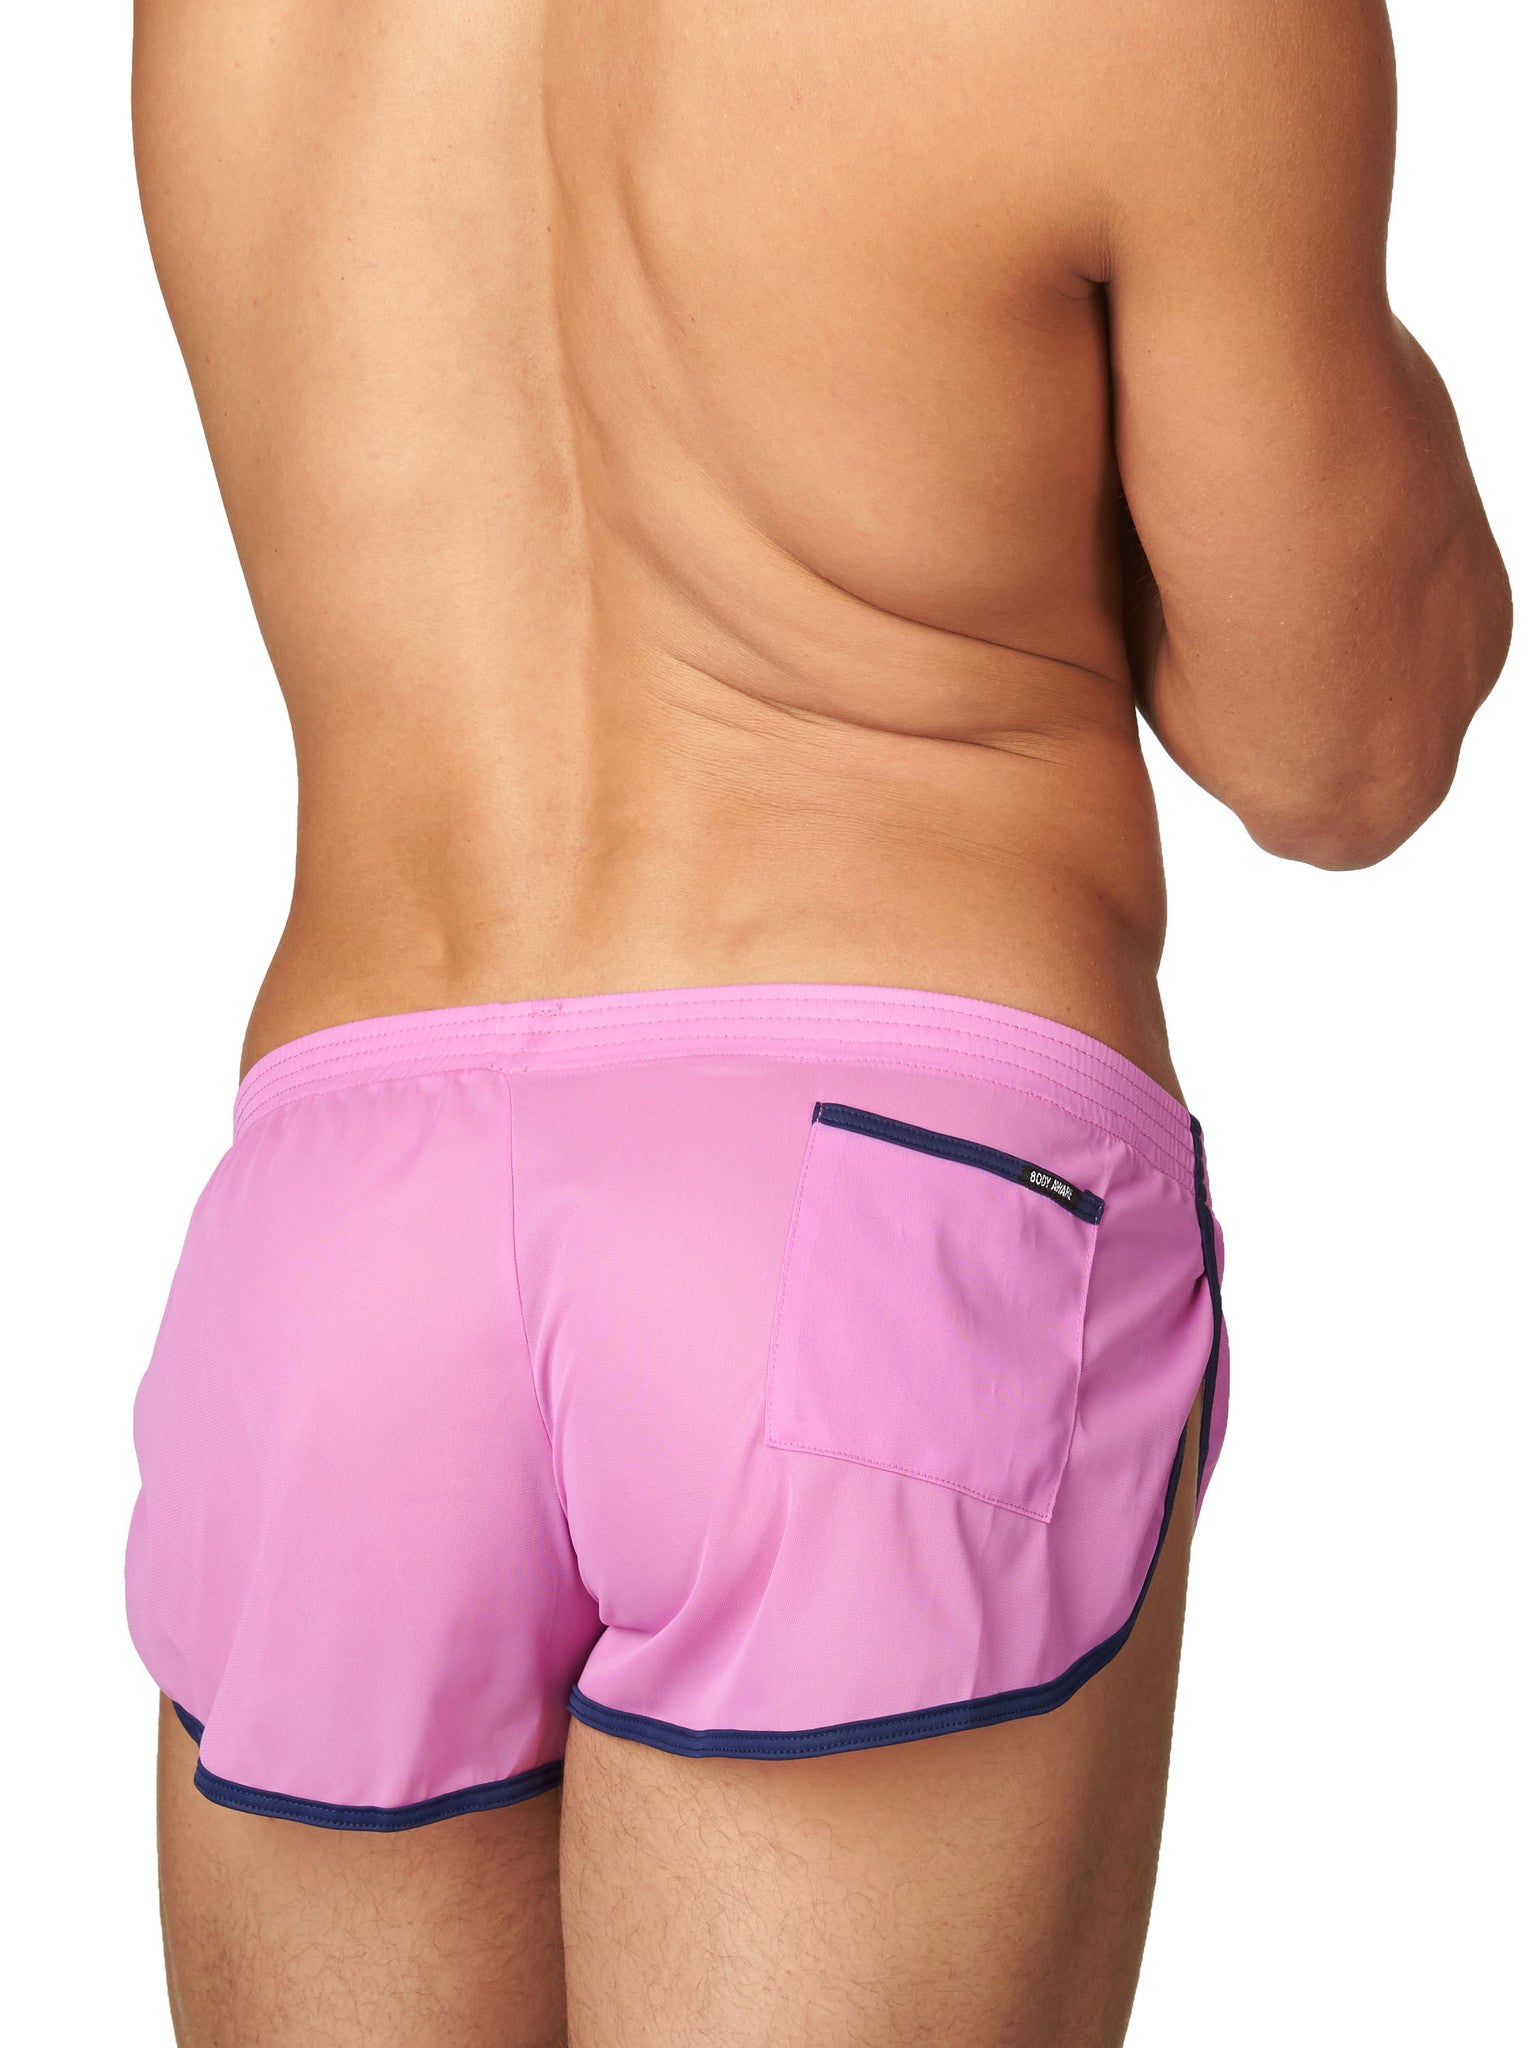 Men's vintage purple side split booty gym shorts